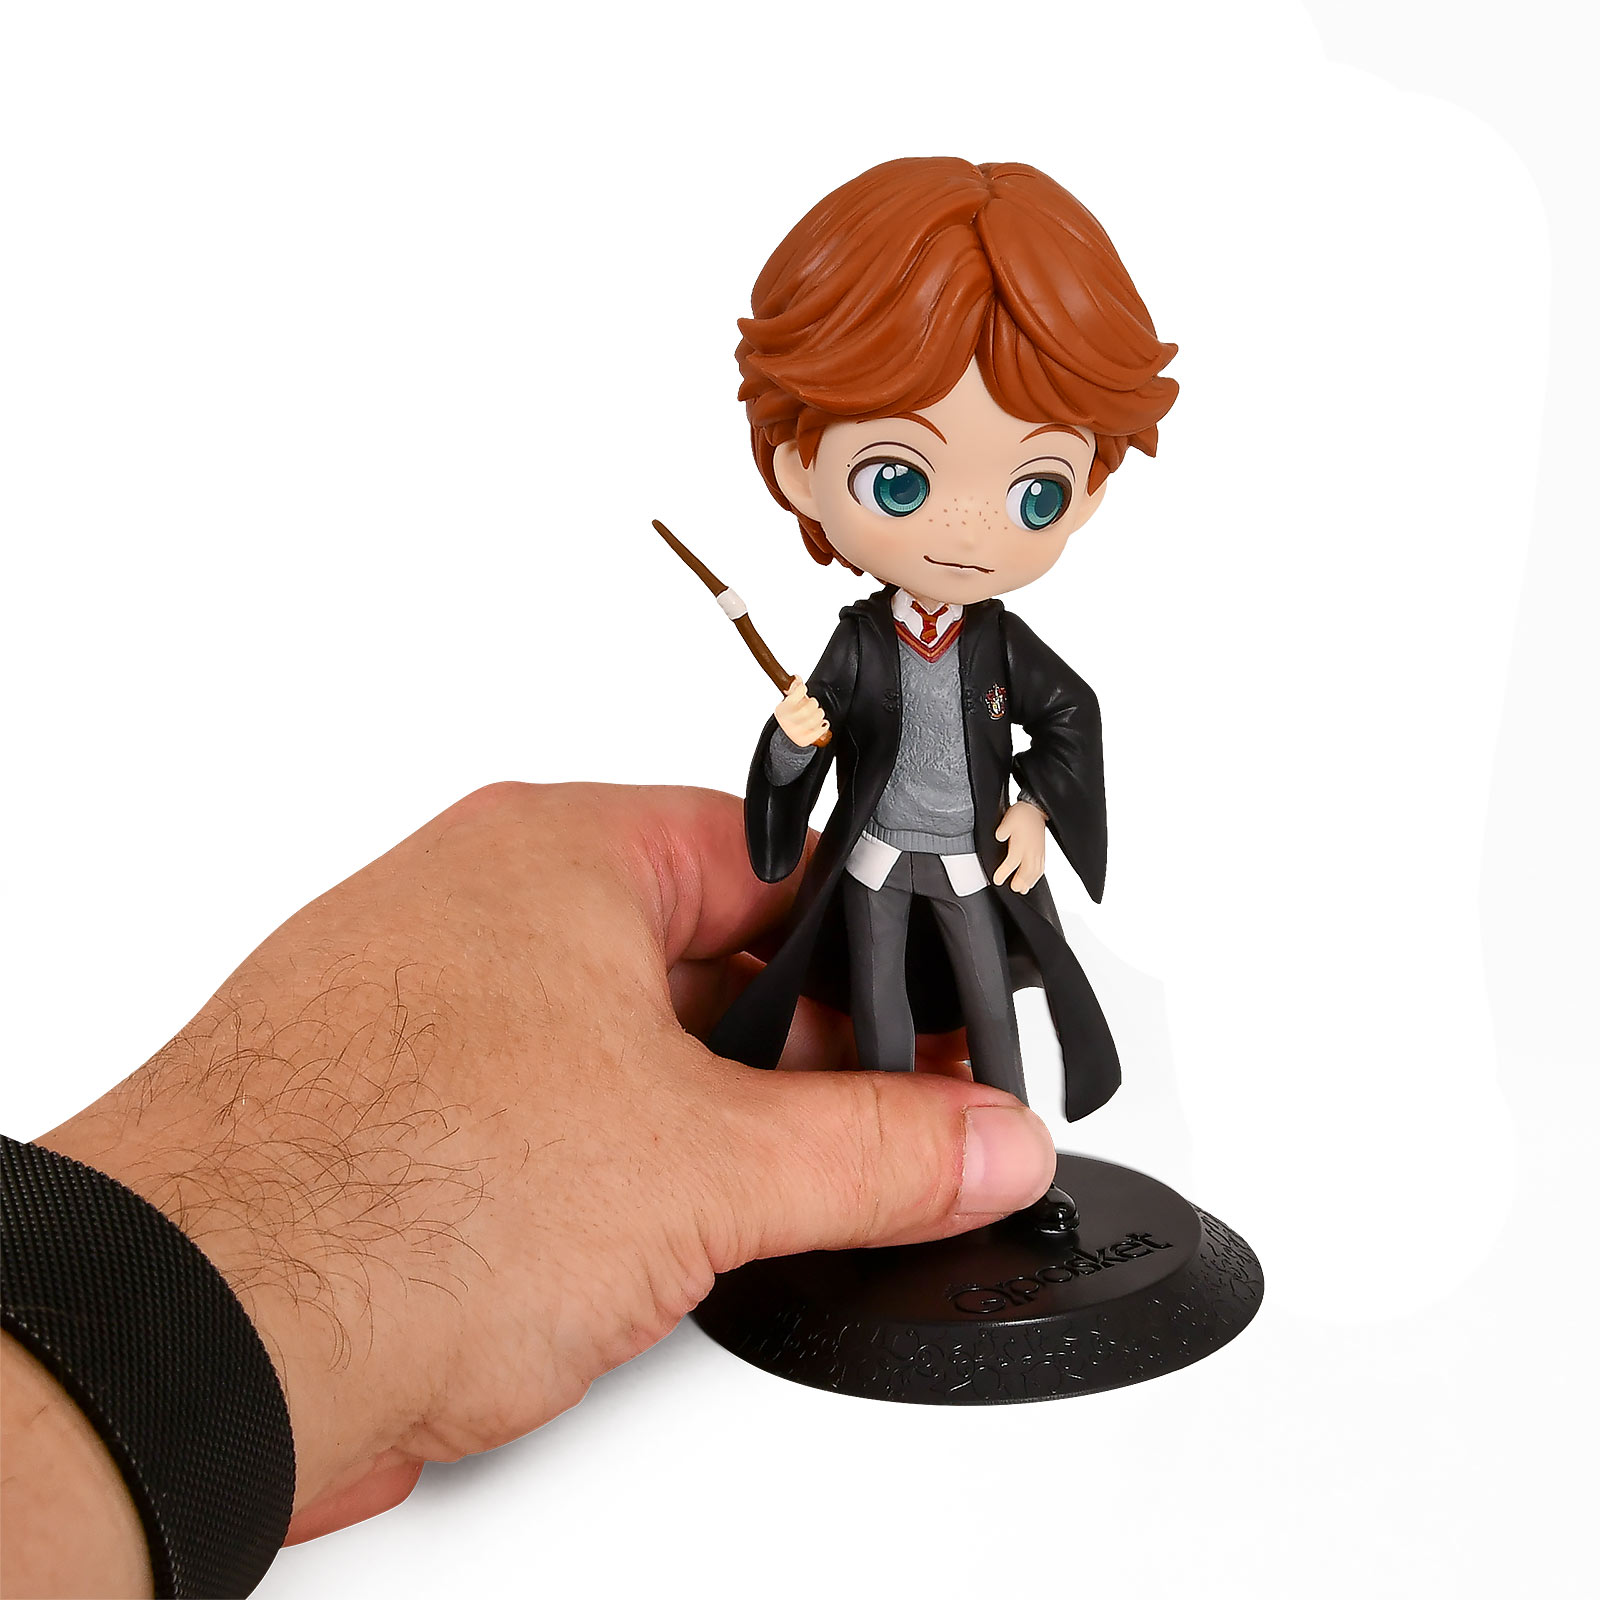 Harry Potter - Ron Weasley Q Posket Figurine 14 cm